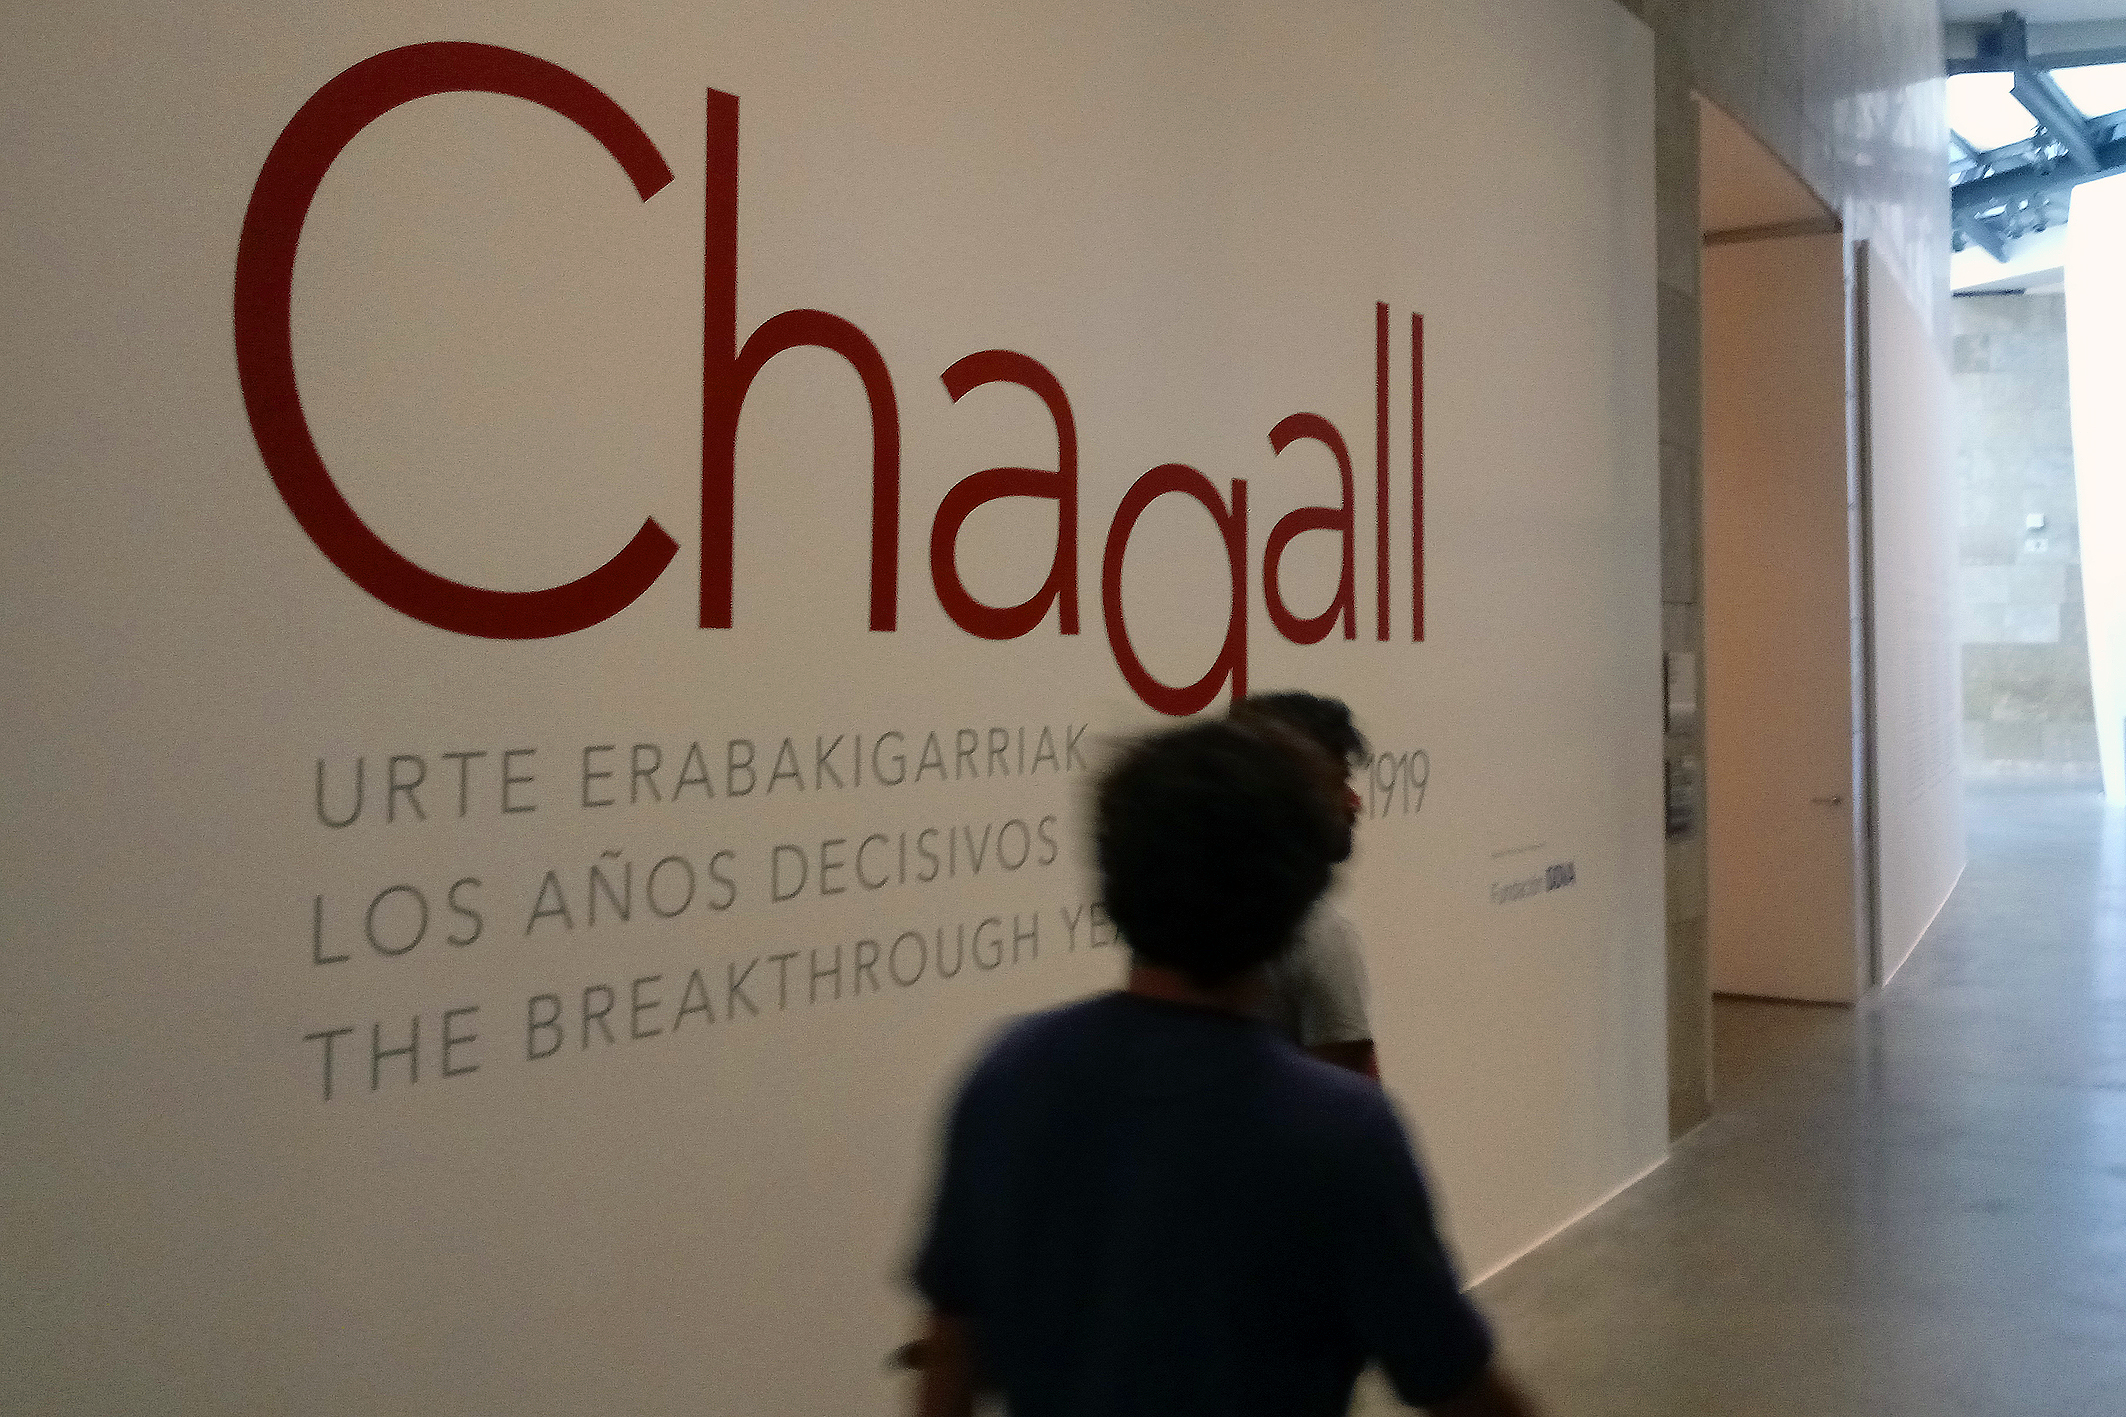 Chagall1